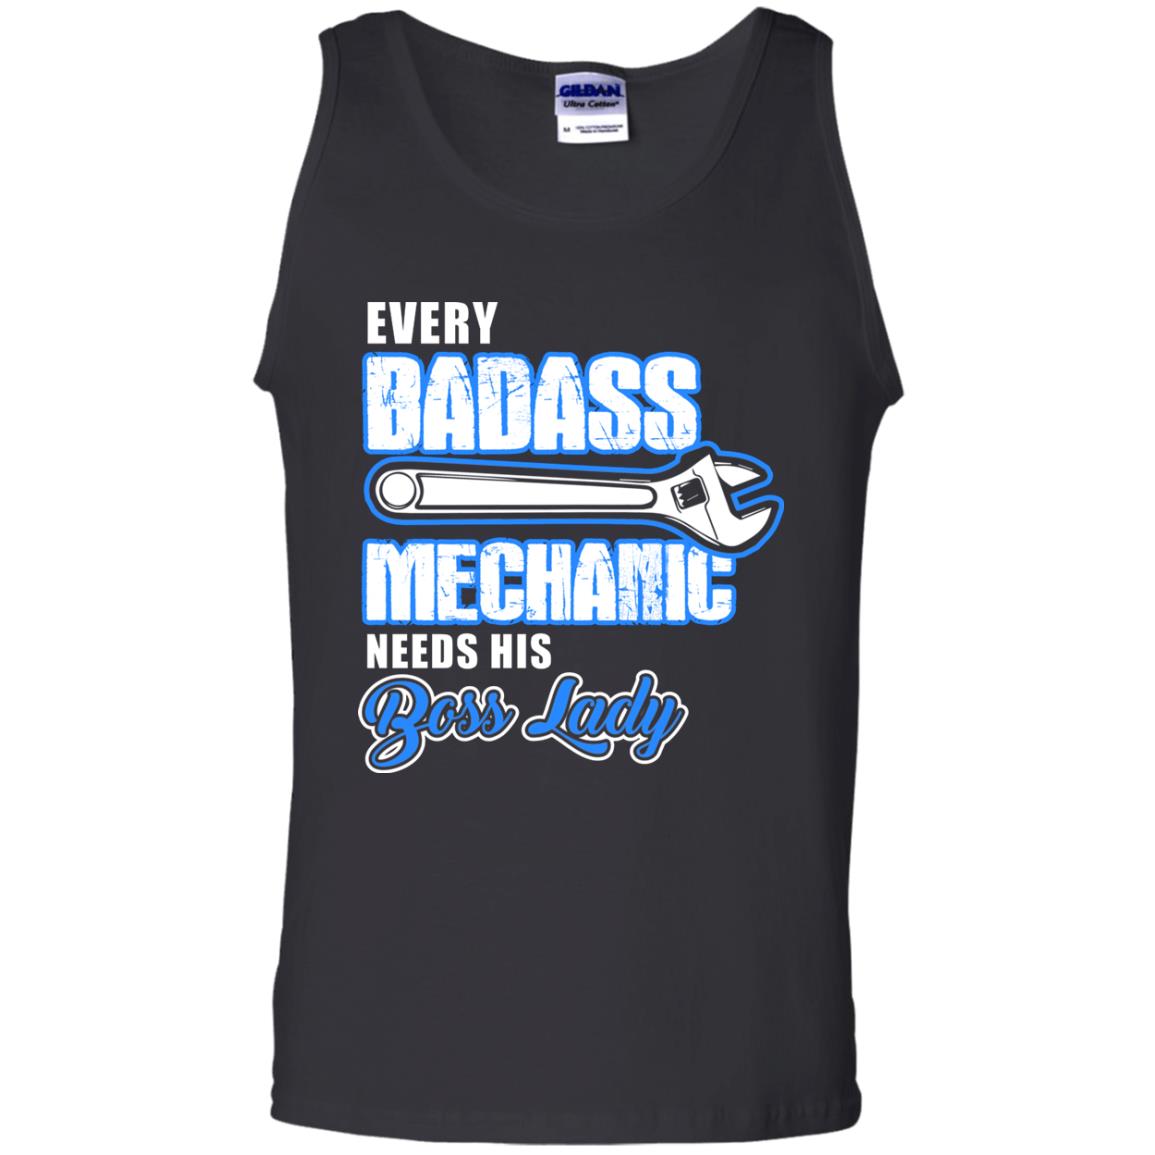 Every Badass Mechanic Needs His Boss Lady ShirtG220 Gildan 100% Cotton Tank Top